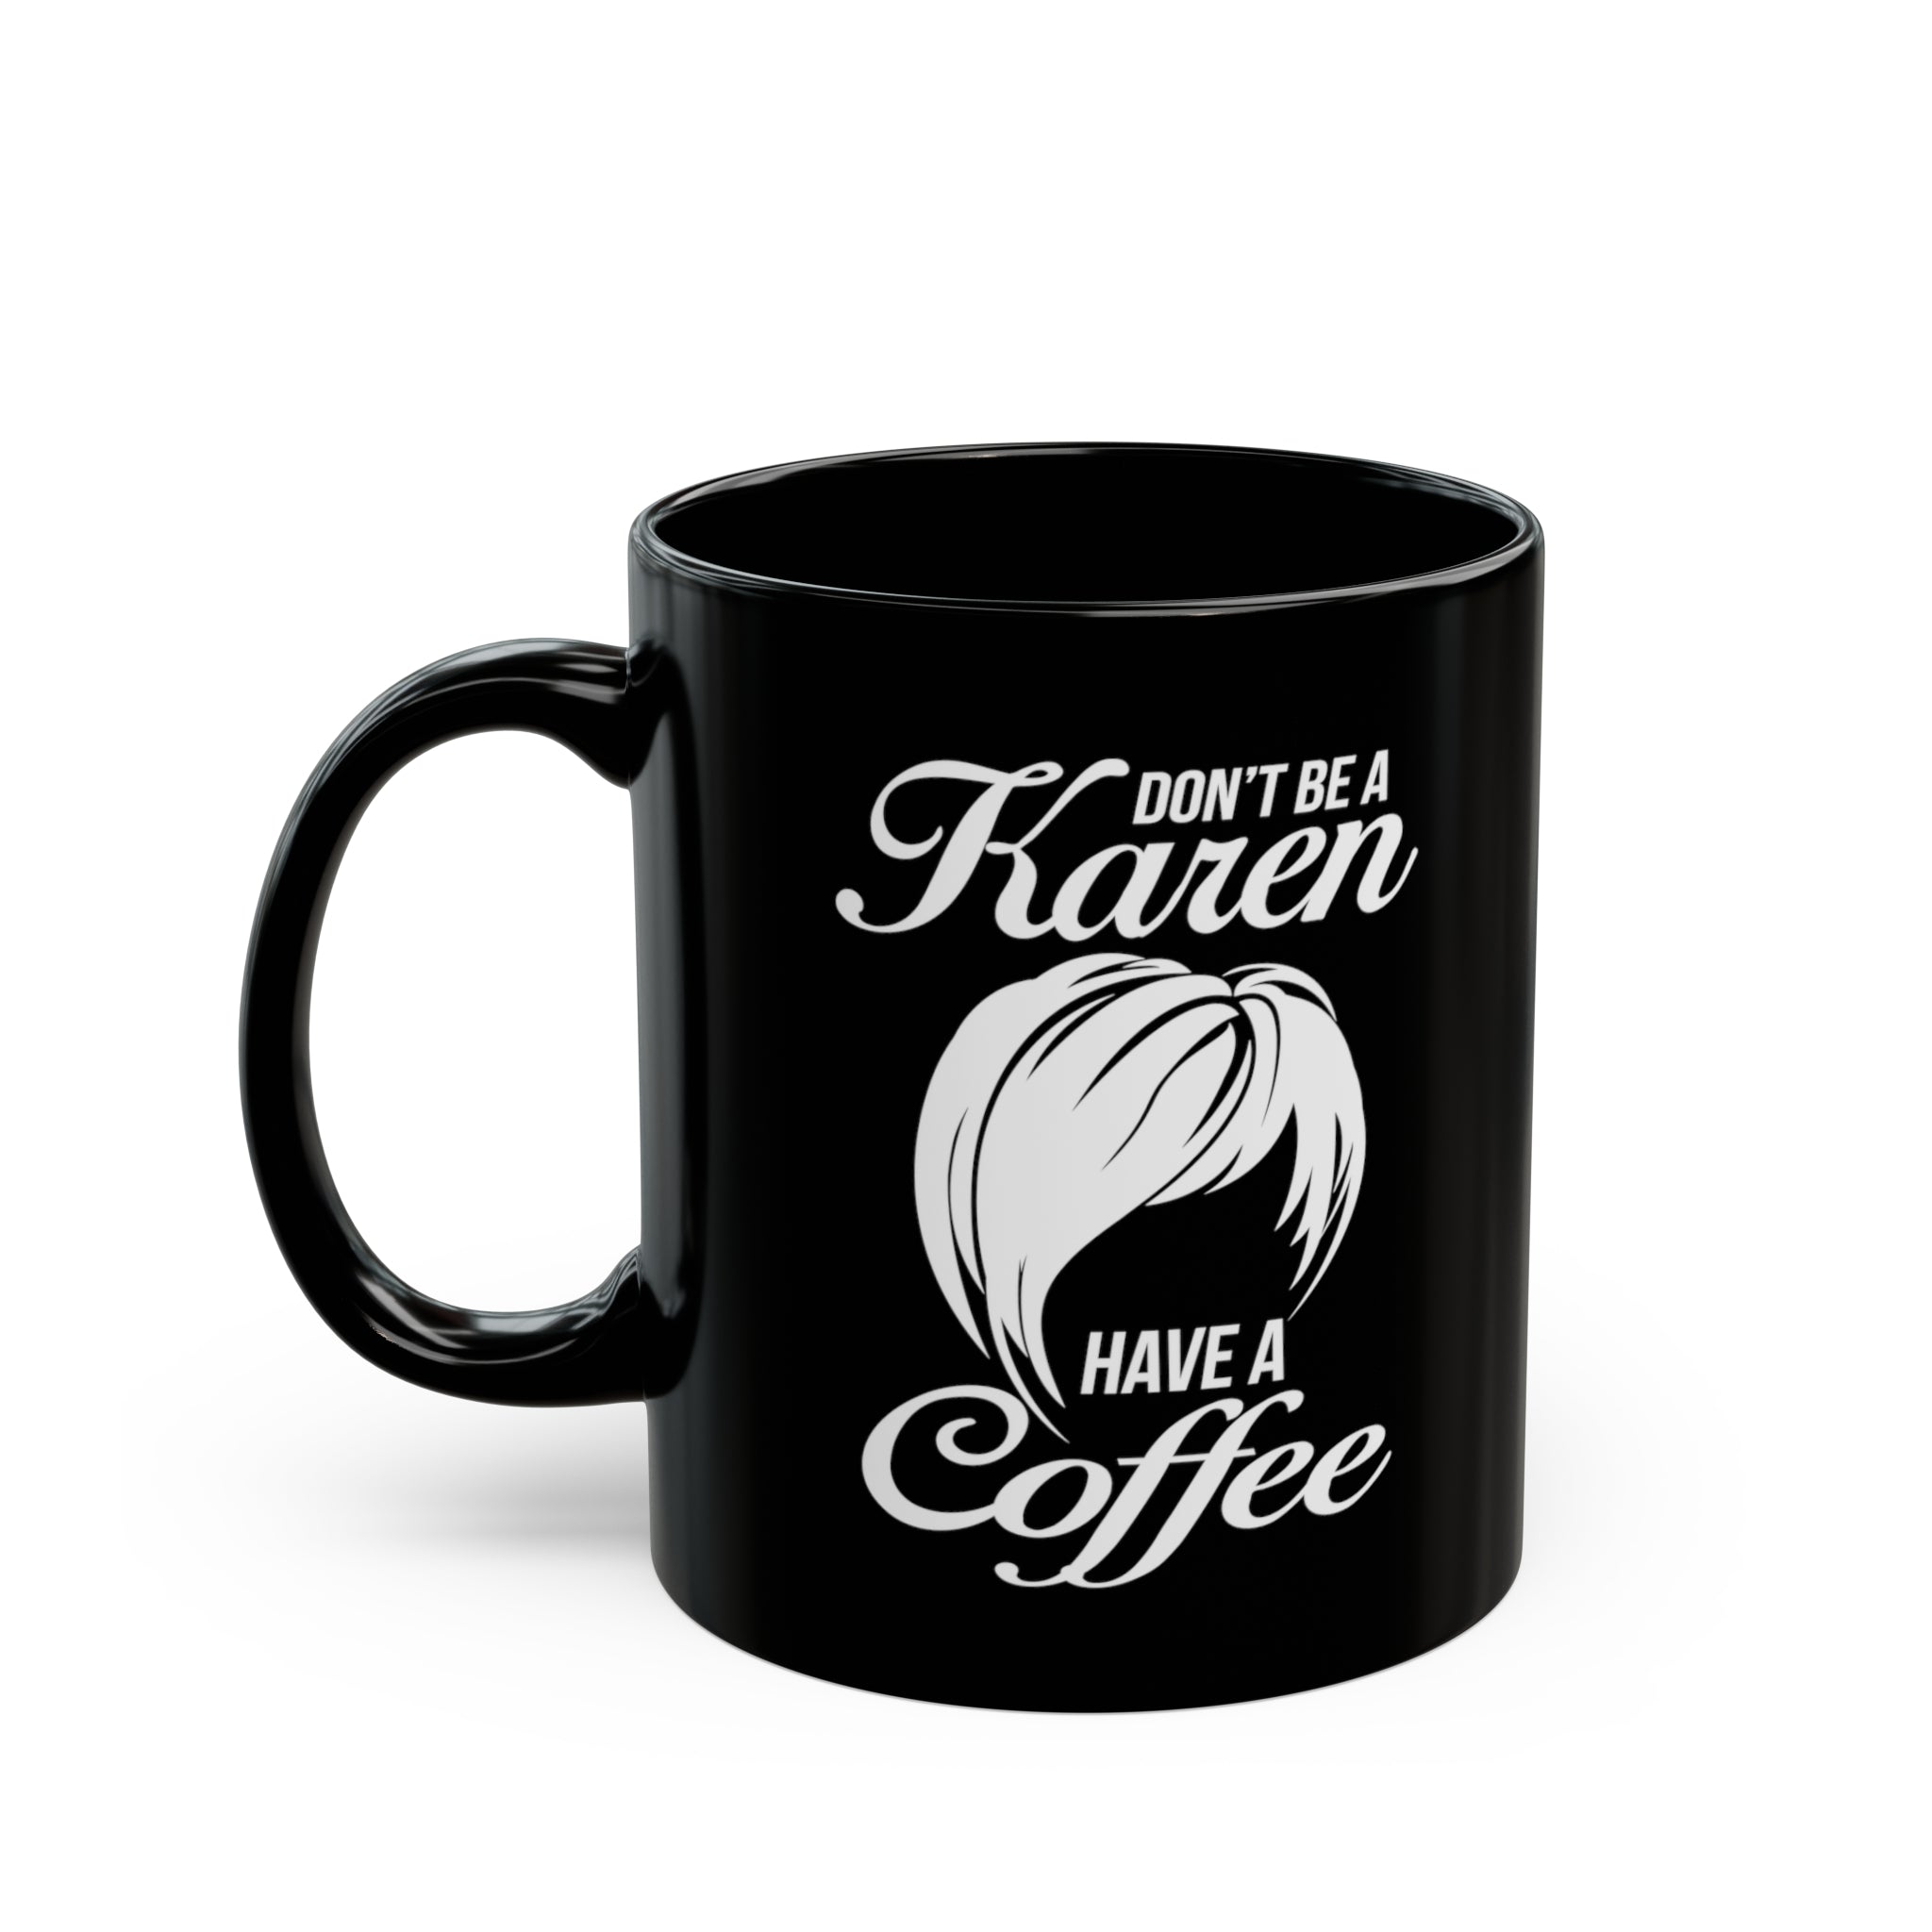 Don't Be A Karen Mug [PERFECT for Grouchy Friends]